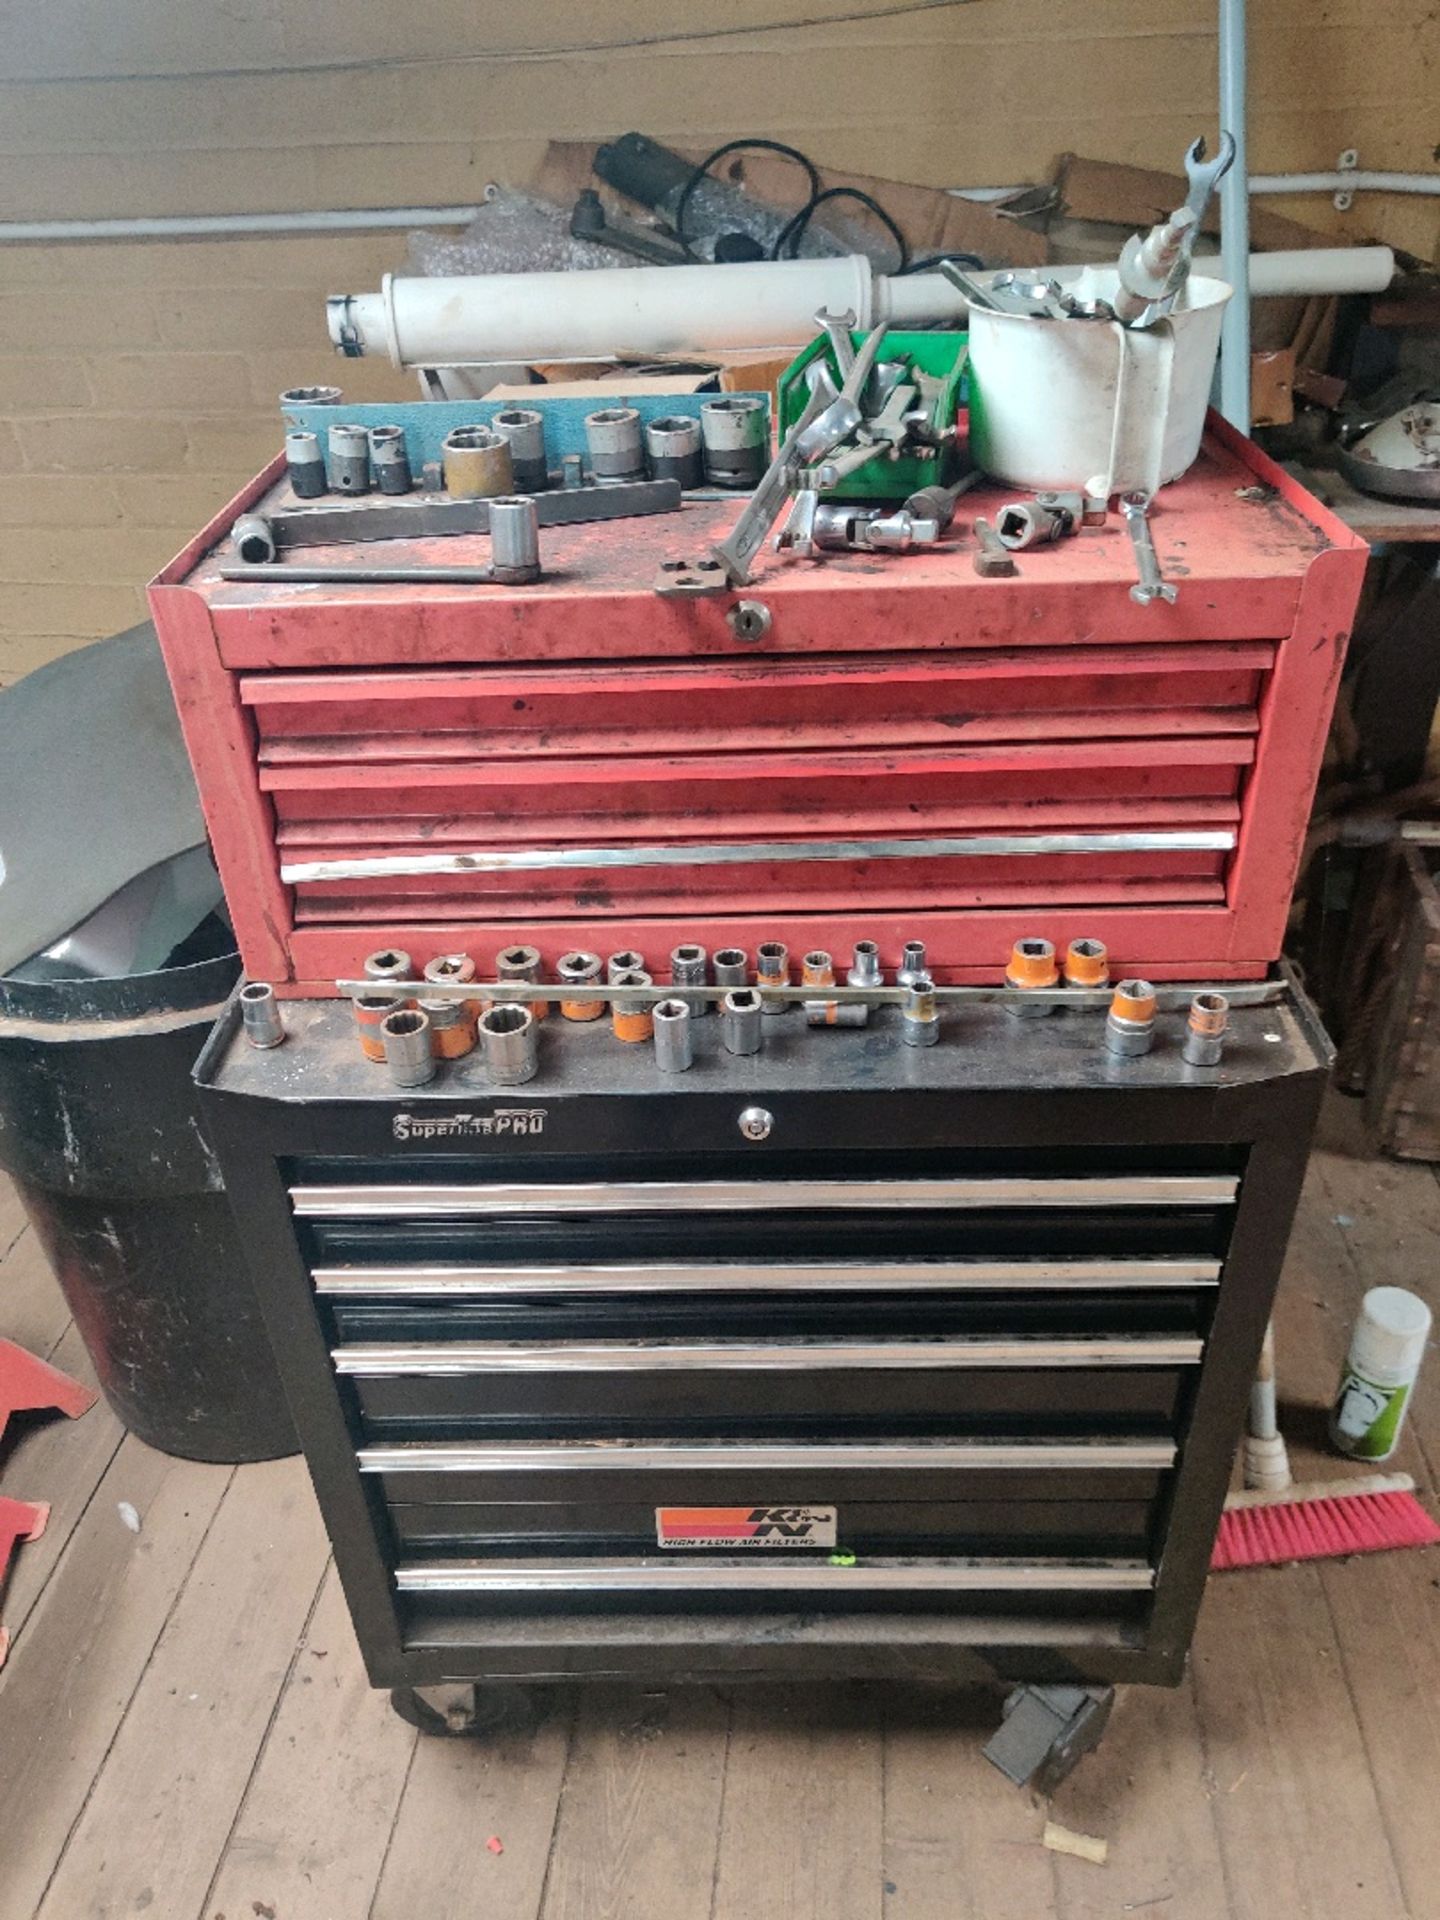 Superline pro tool box